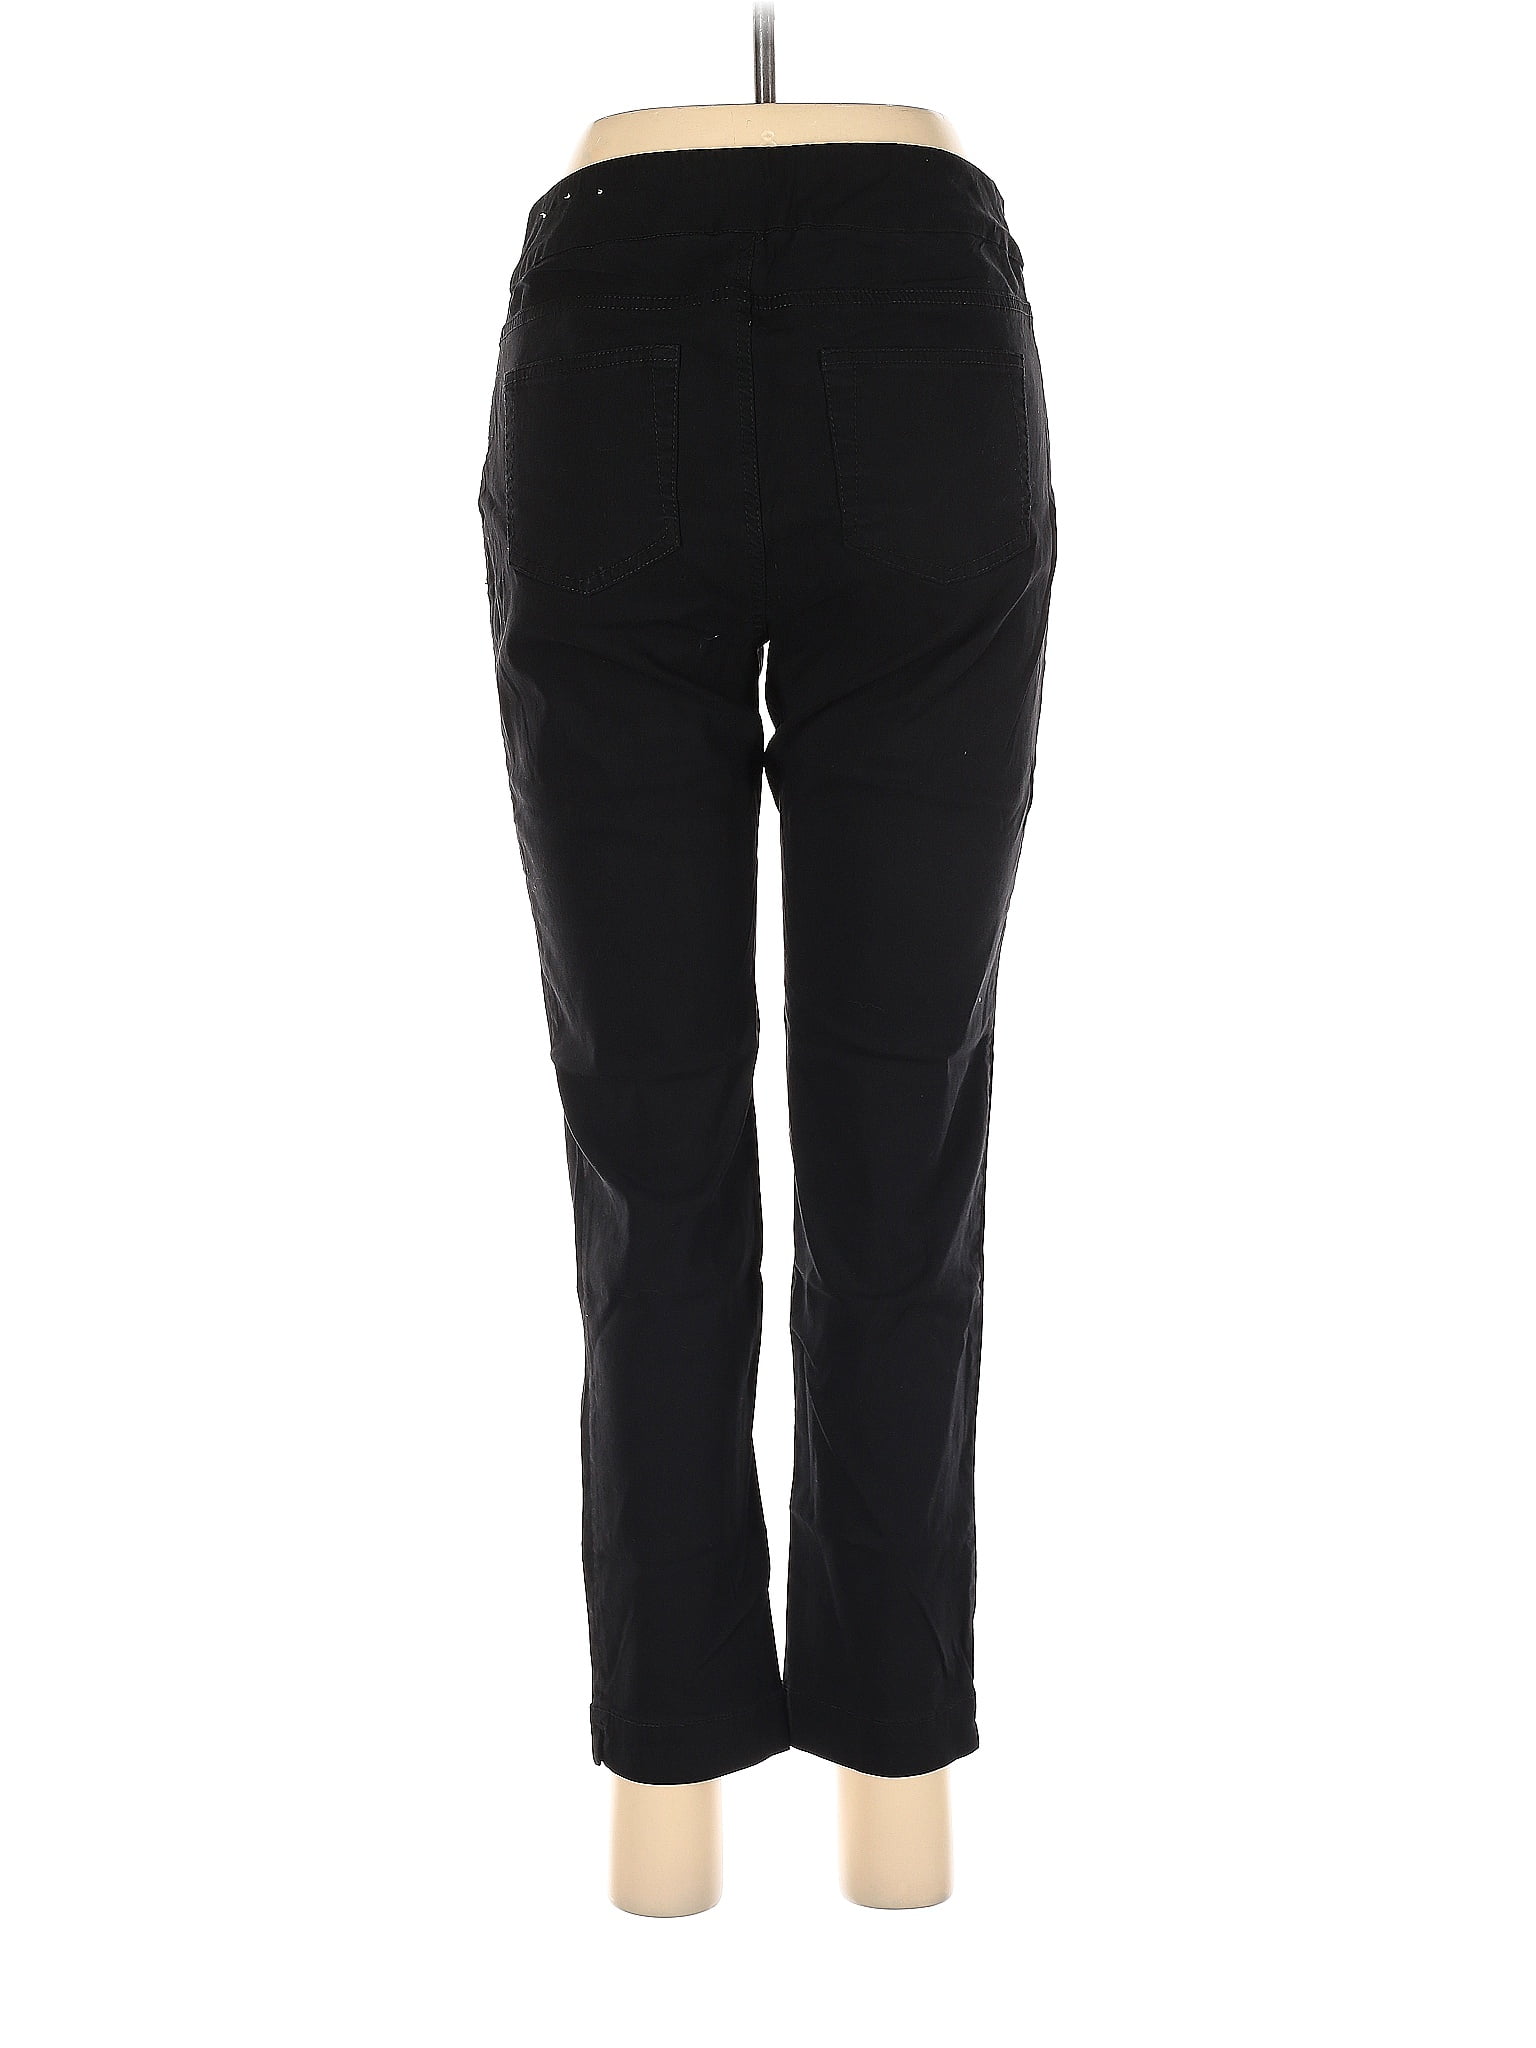 Soft Surroundings Black Casual Pants Size M - 74% off